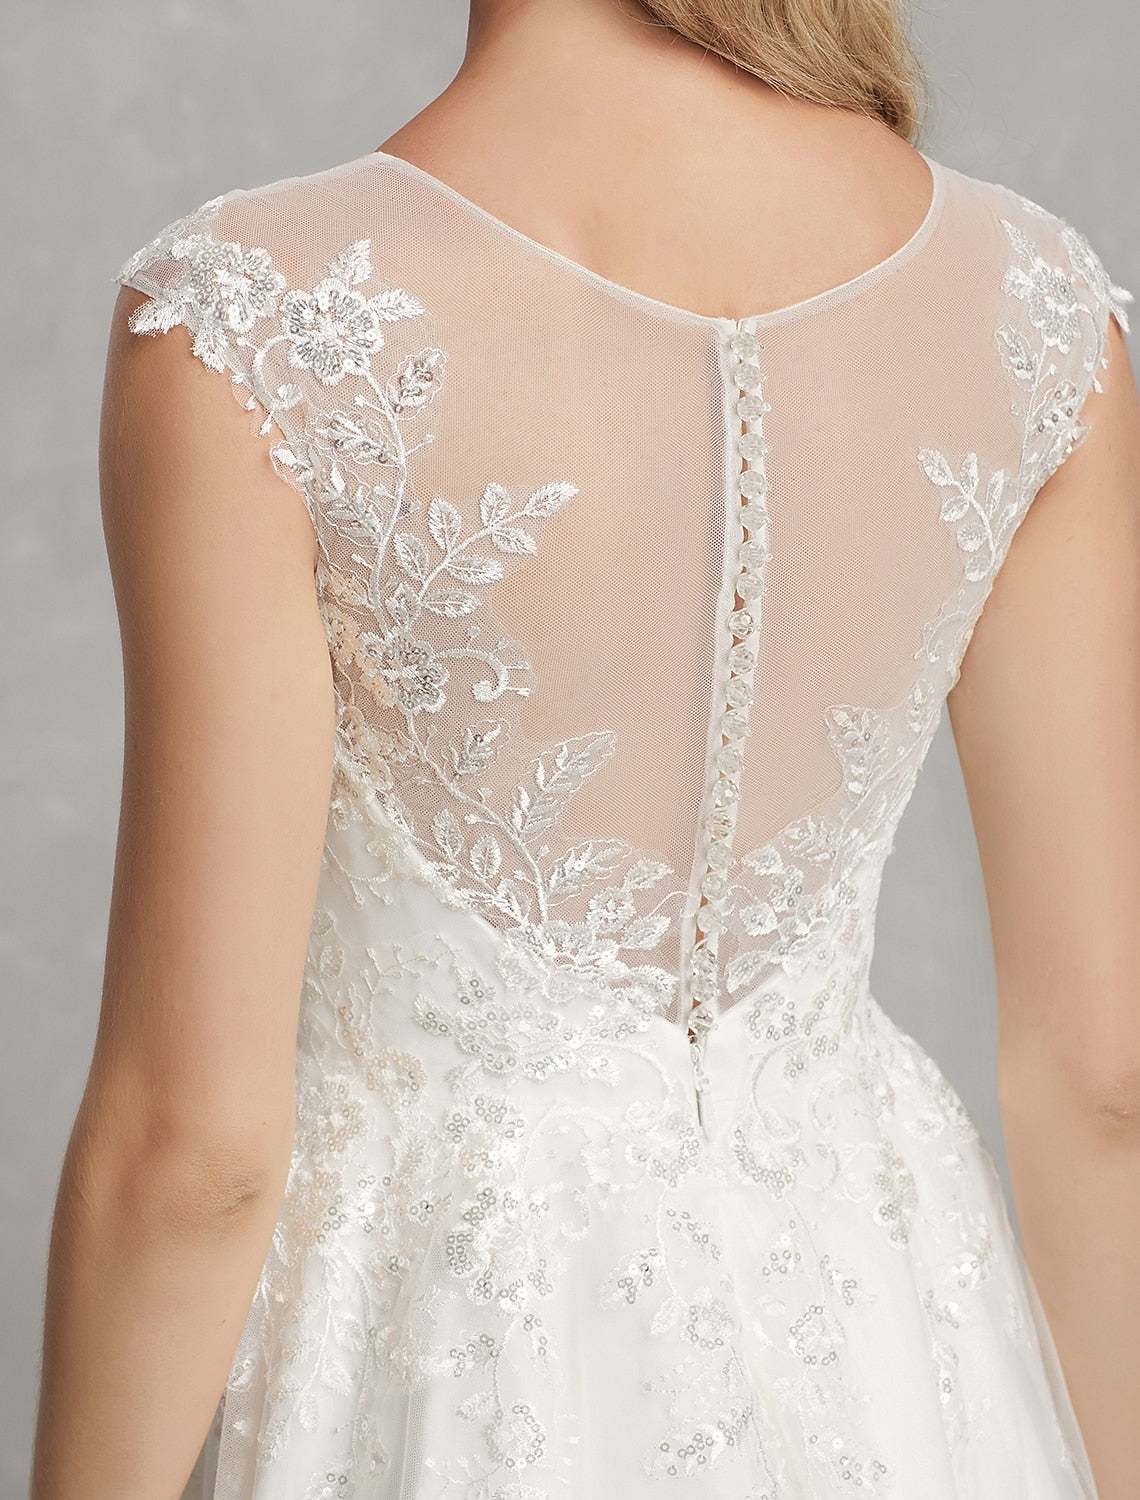 Reception Little White Dresses Wedding Dresses A-Line Illusion Neck Cap Sleeve Knee Length Lace Bridal Gowns With Appliques